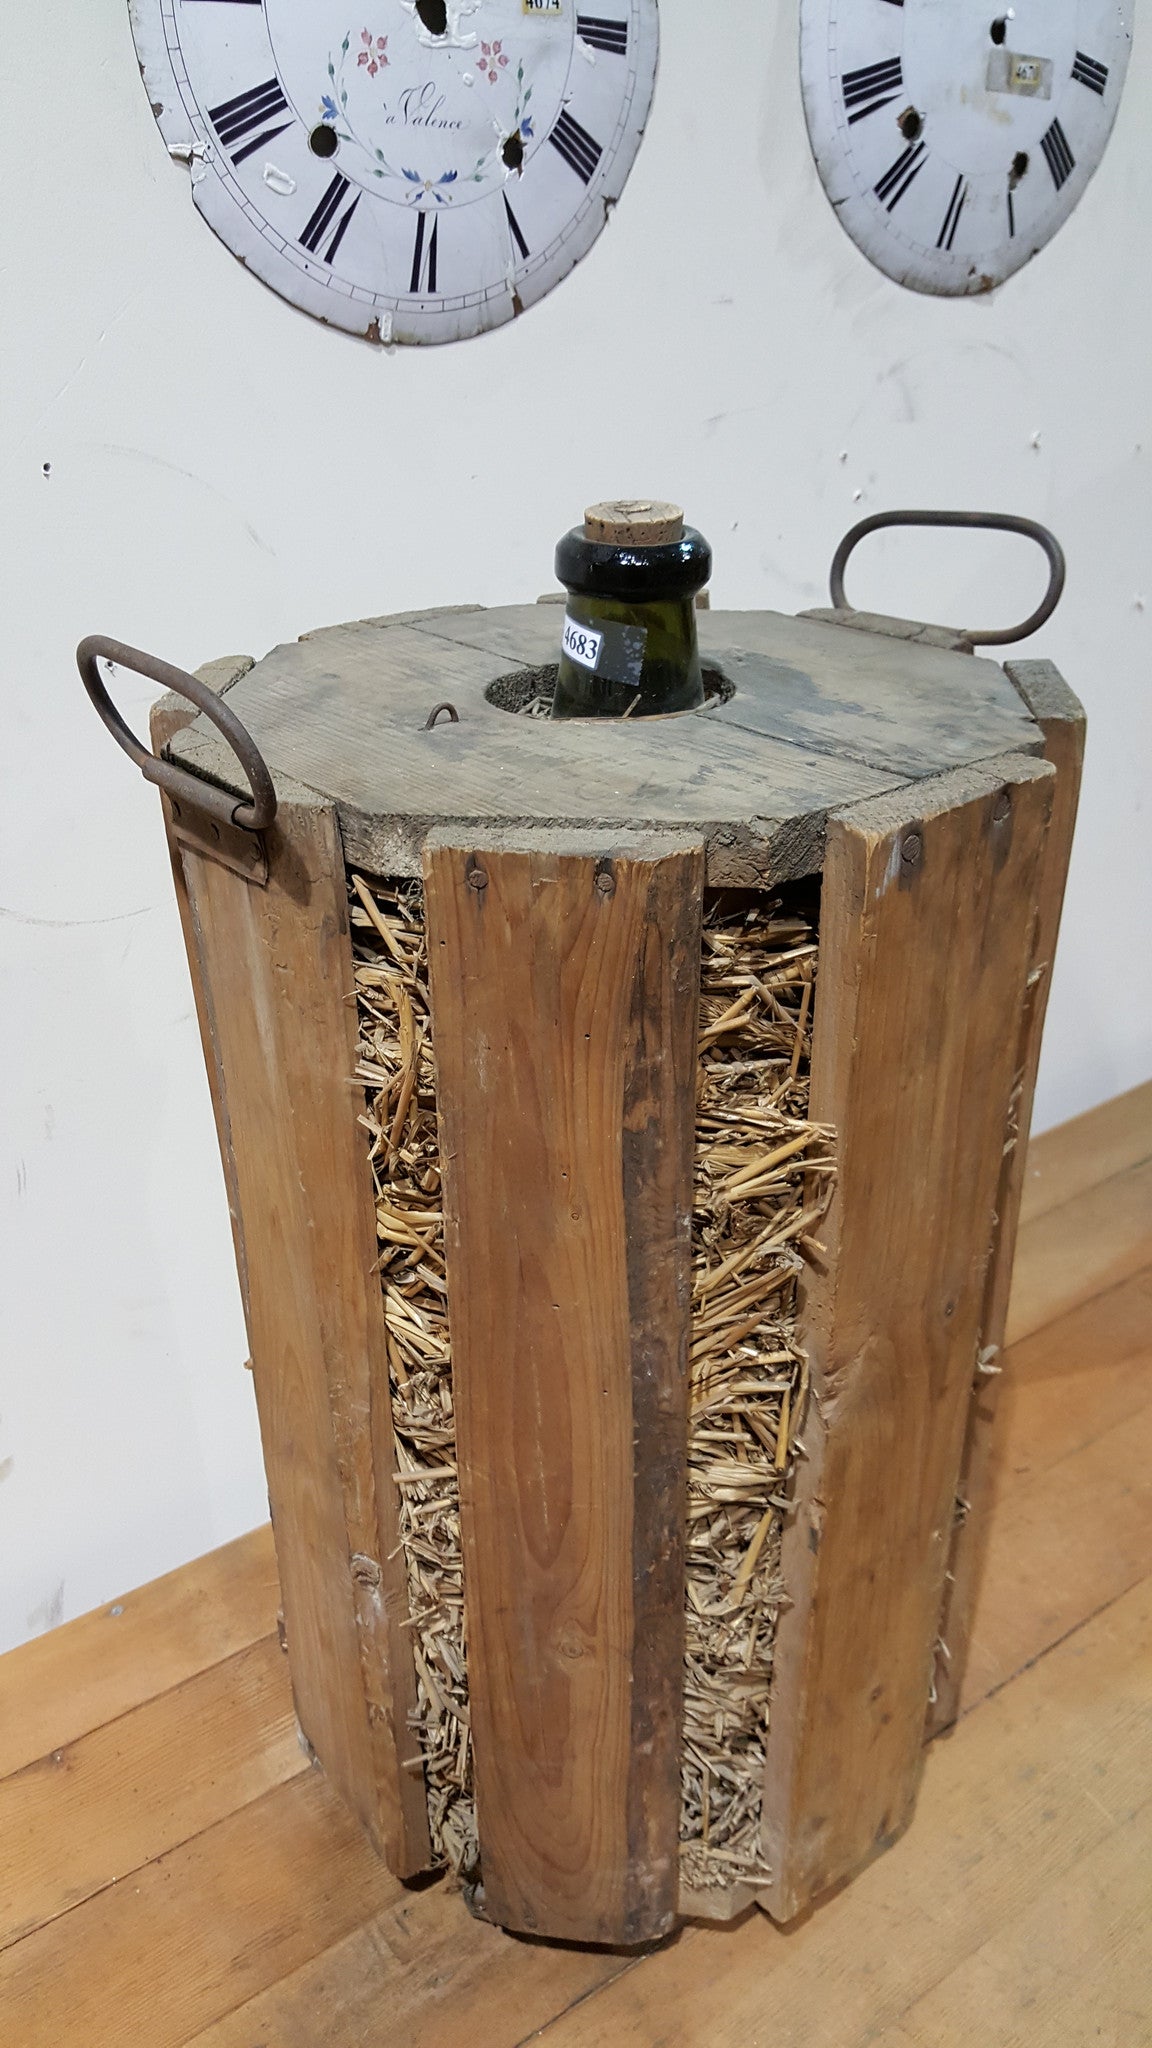 Wine Bottle in Wood Crate